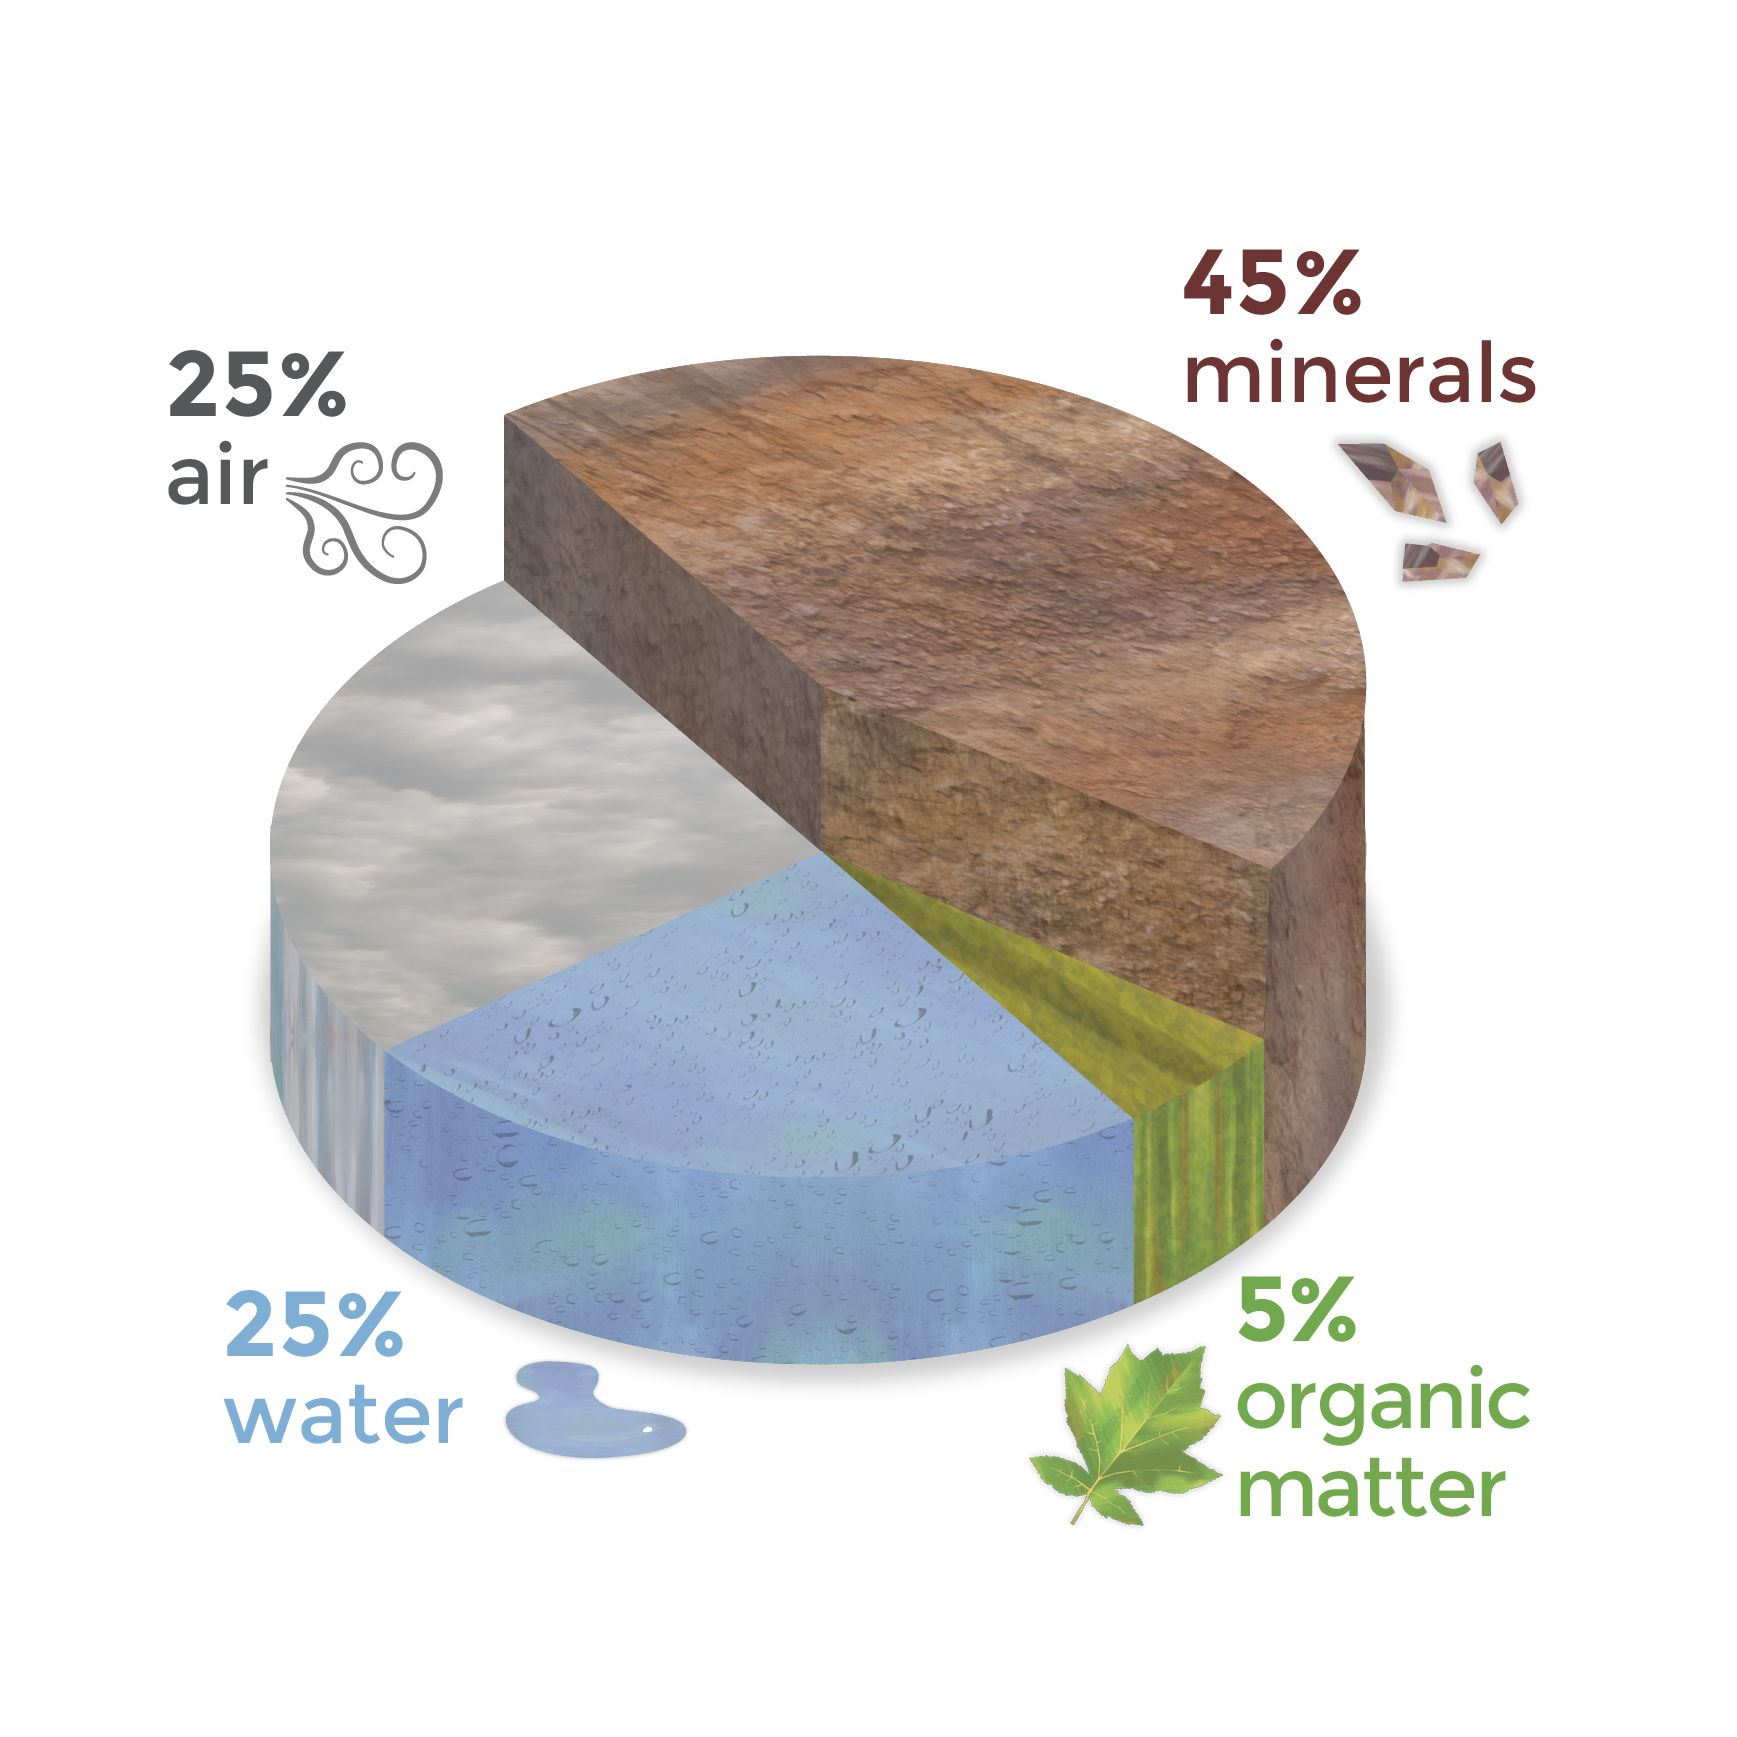 Pie chart of soil composition: 45% minerals, 25% air, 25% water, 5% organic matter